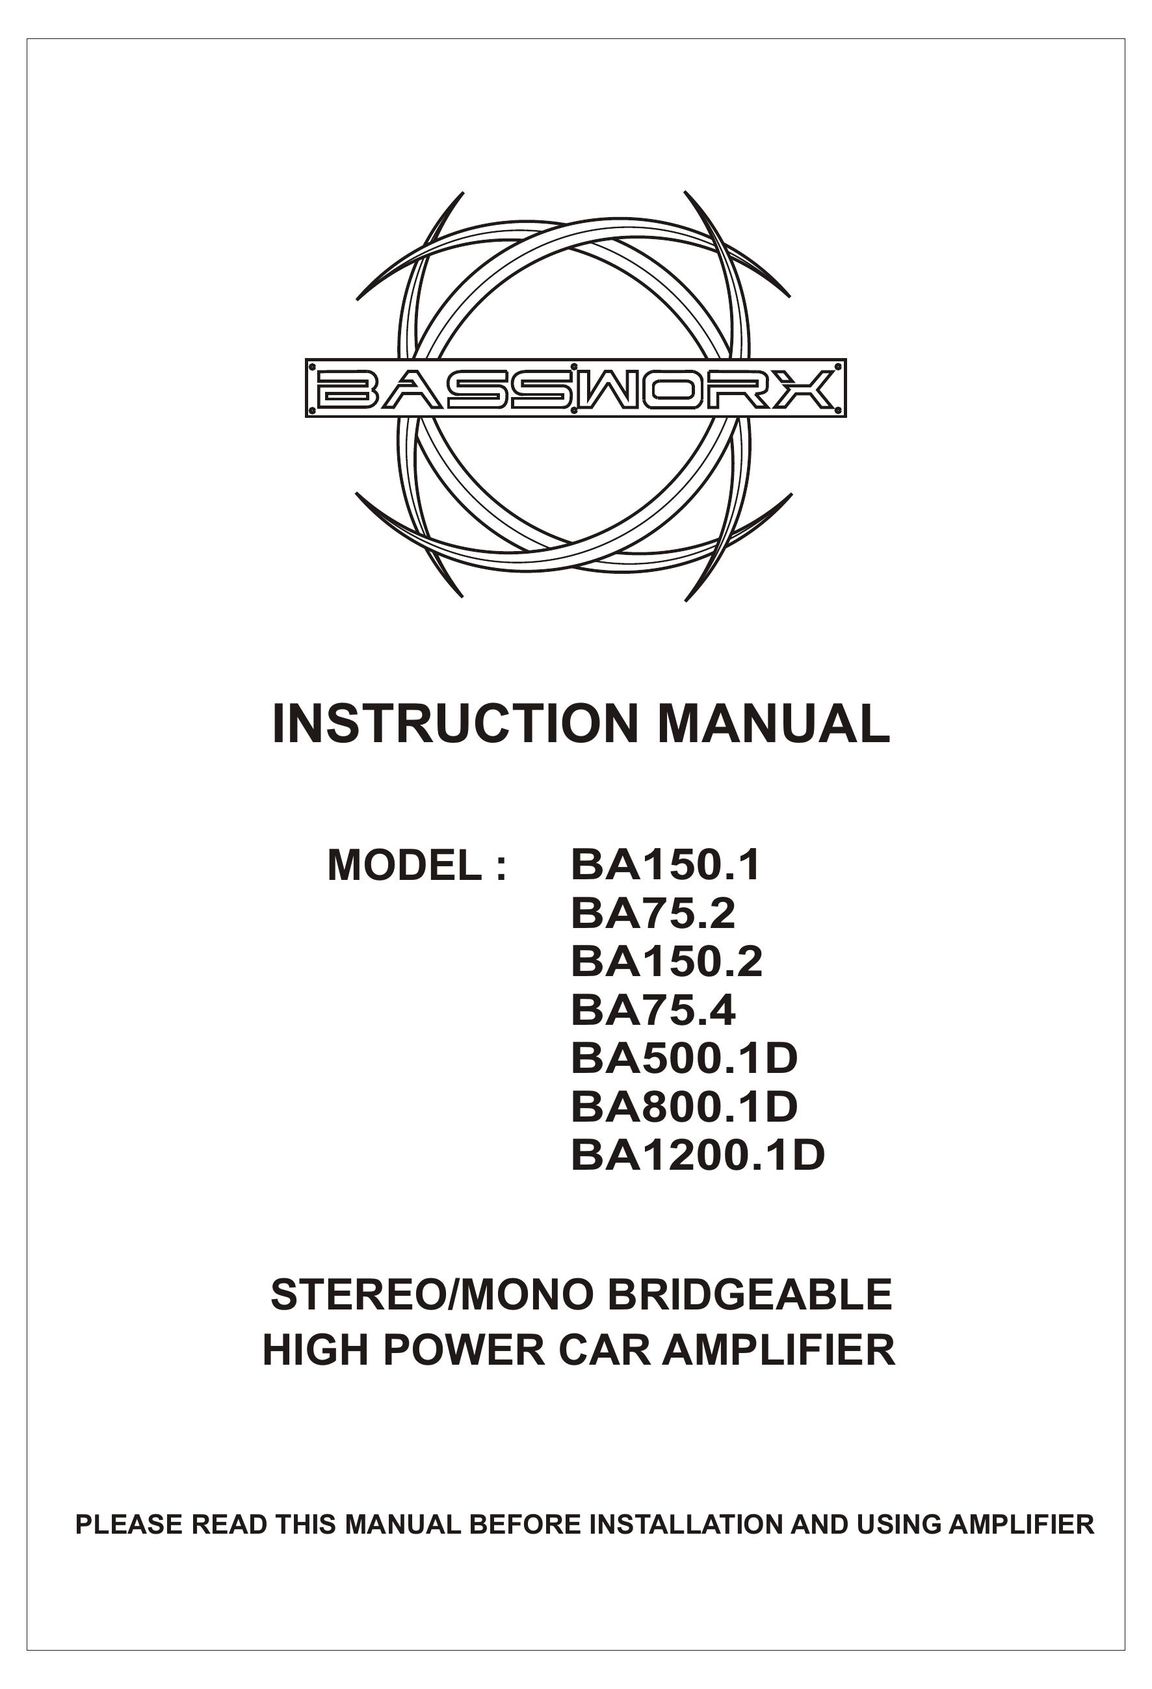 Bassworx BA75.4 Car Amplifier User Manual